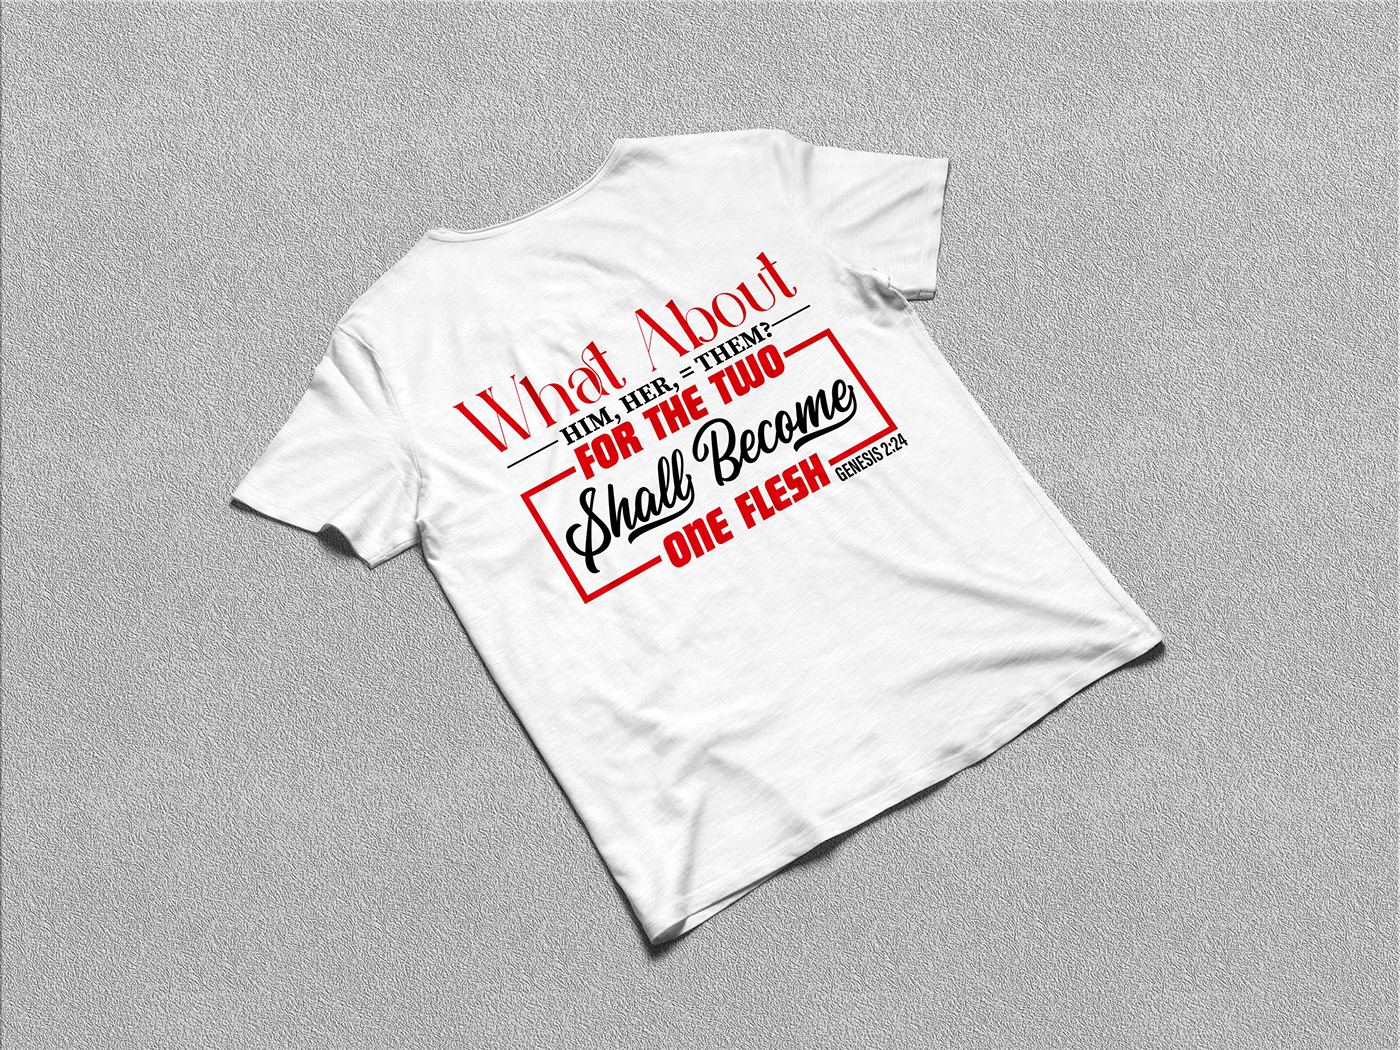 typography t shirt inspirational t shirt T-Shirt Design t-shirt graphics Empowerment apparel motivational design Positive fashion